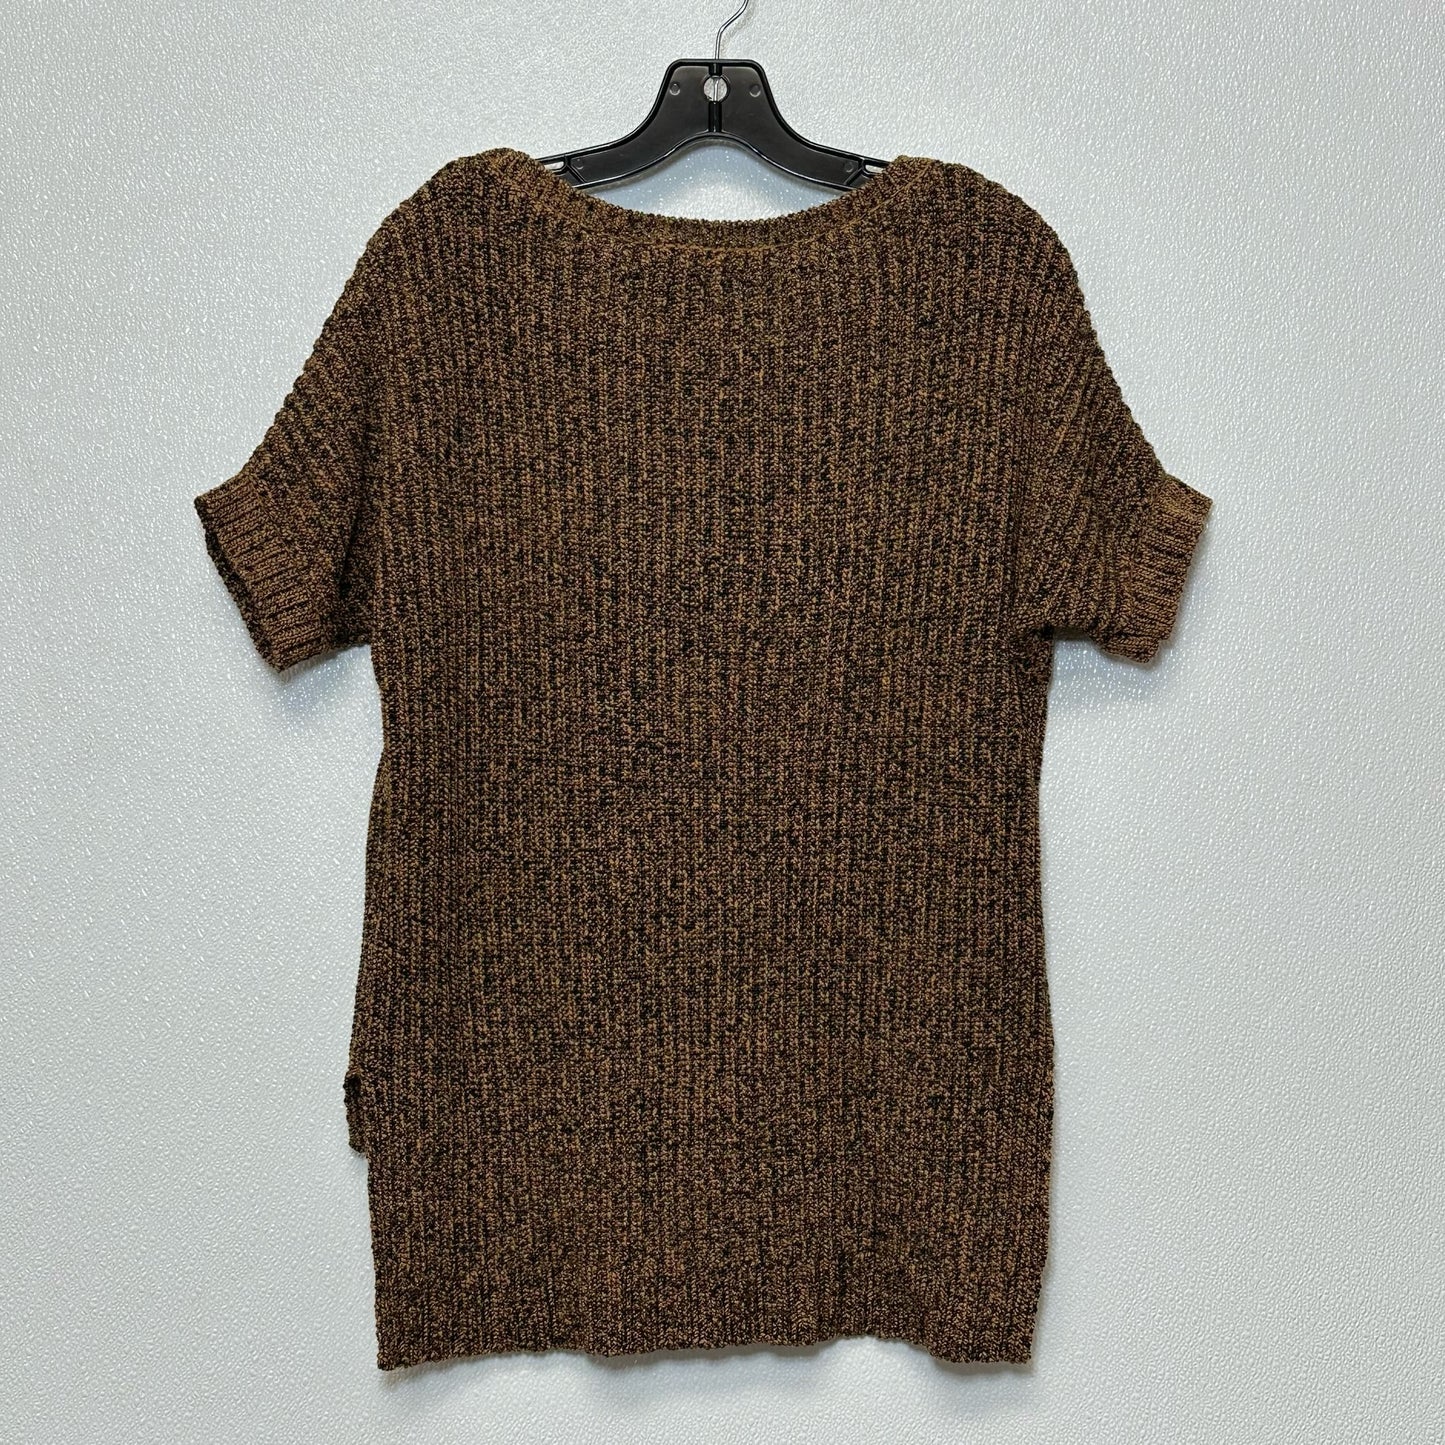 Sweater By Rachel Roy  Size: M